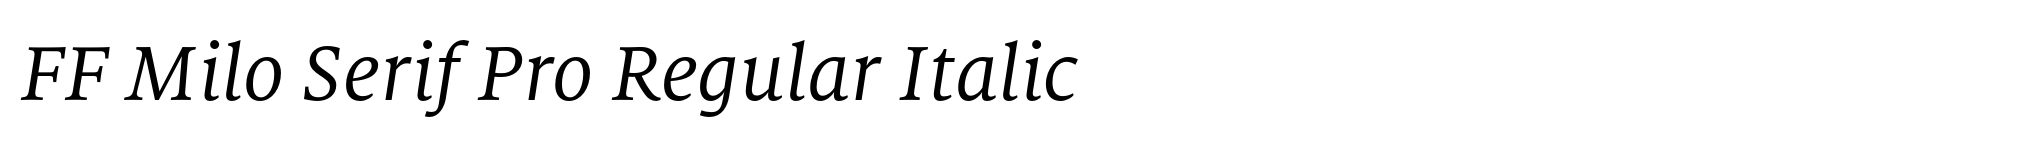 FF Milo Serif Pro Regular Italic image